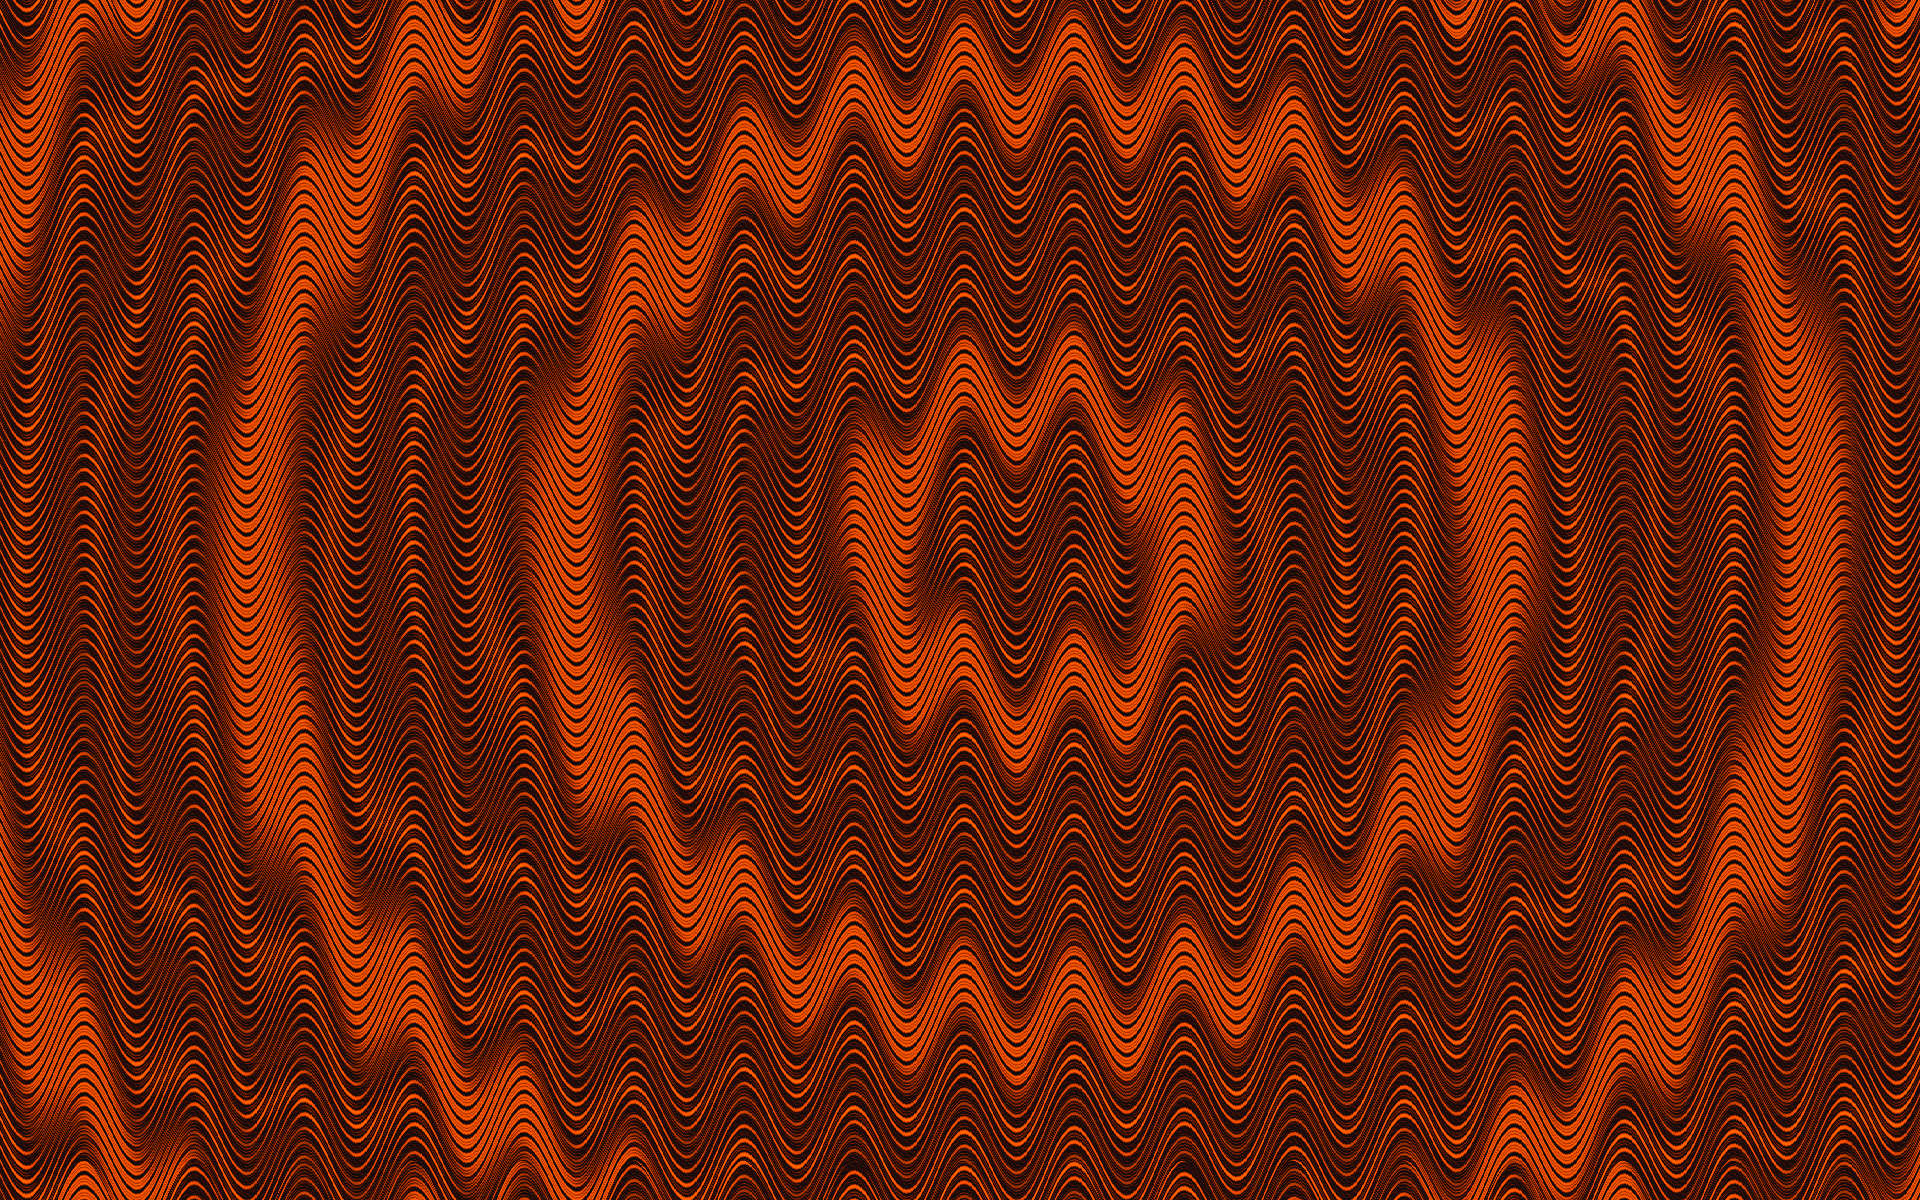 Artistic Wave Brown Illusion 1920x1200